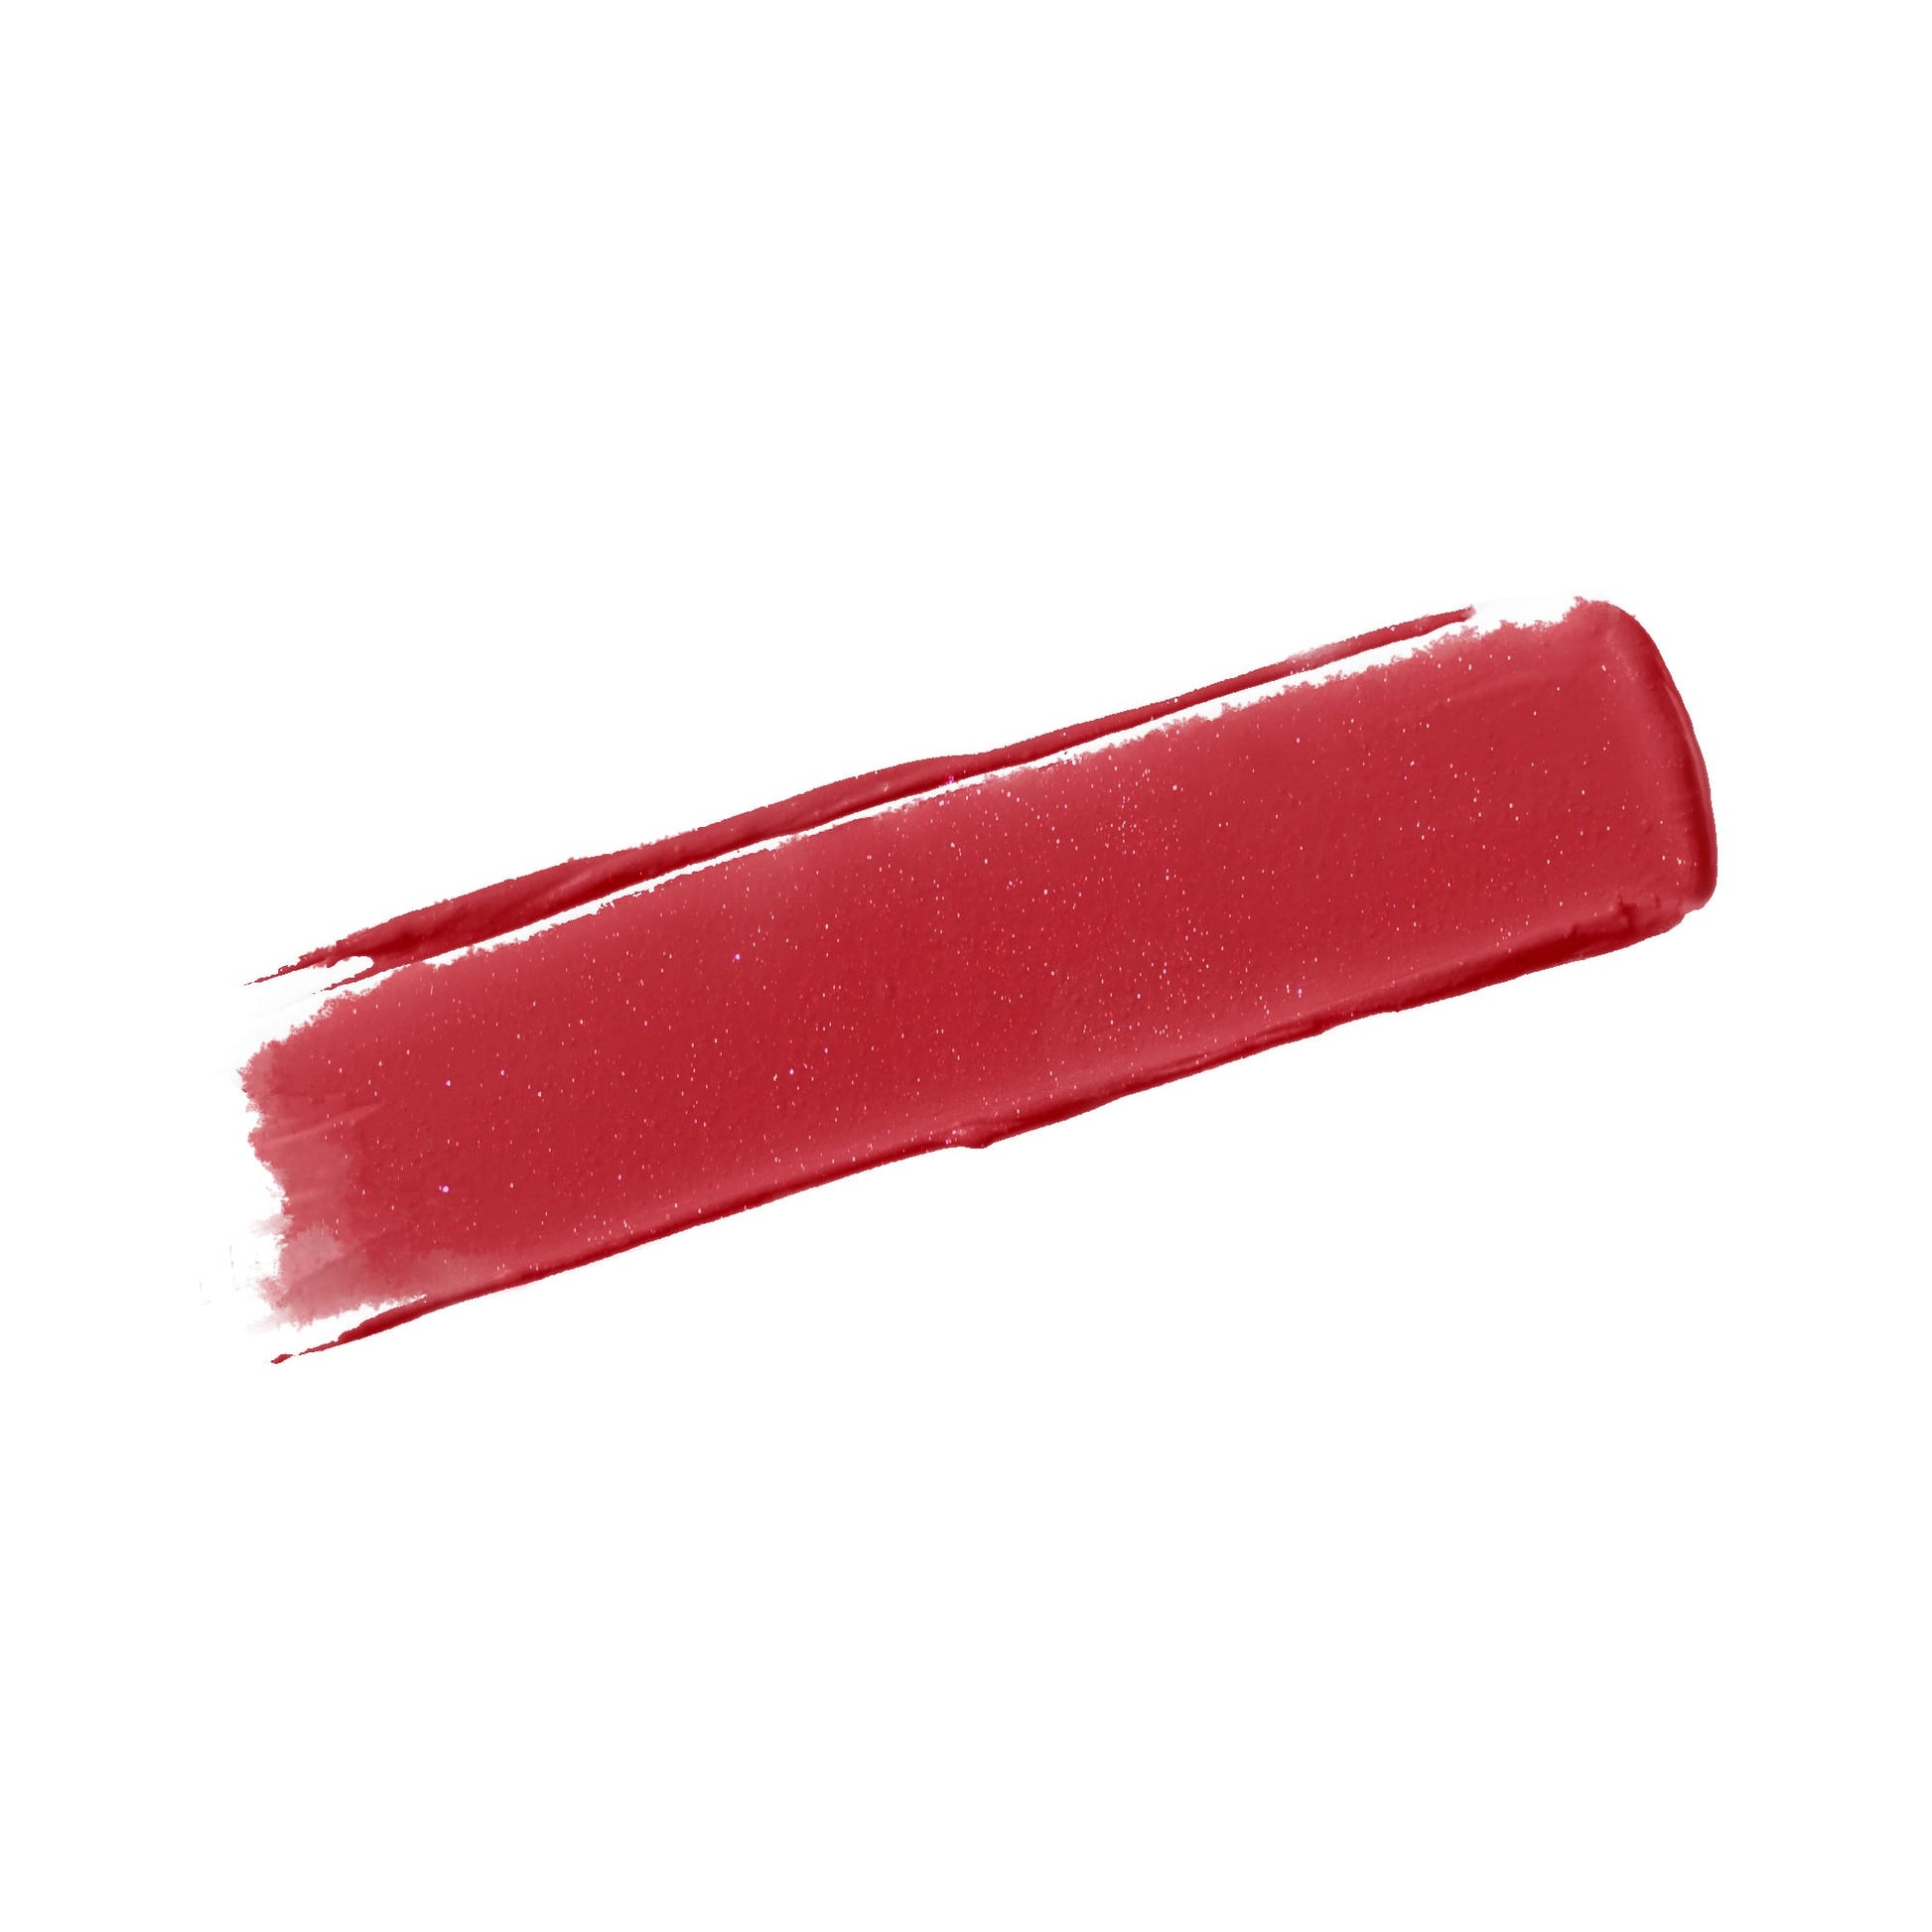 Amorous - Satin Liquid Lipstick Liquid Lipstick - Laila Beauty Care Liquid Lipstick